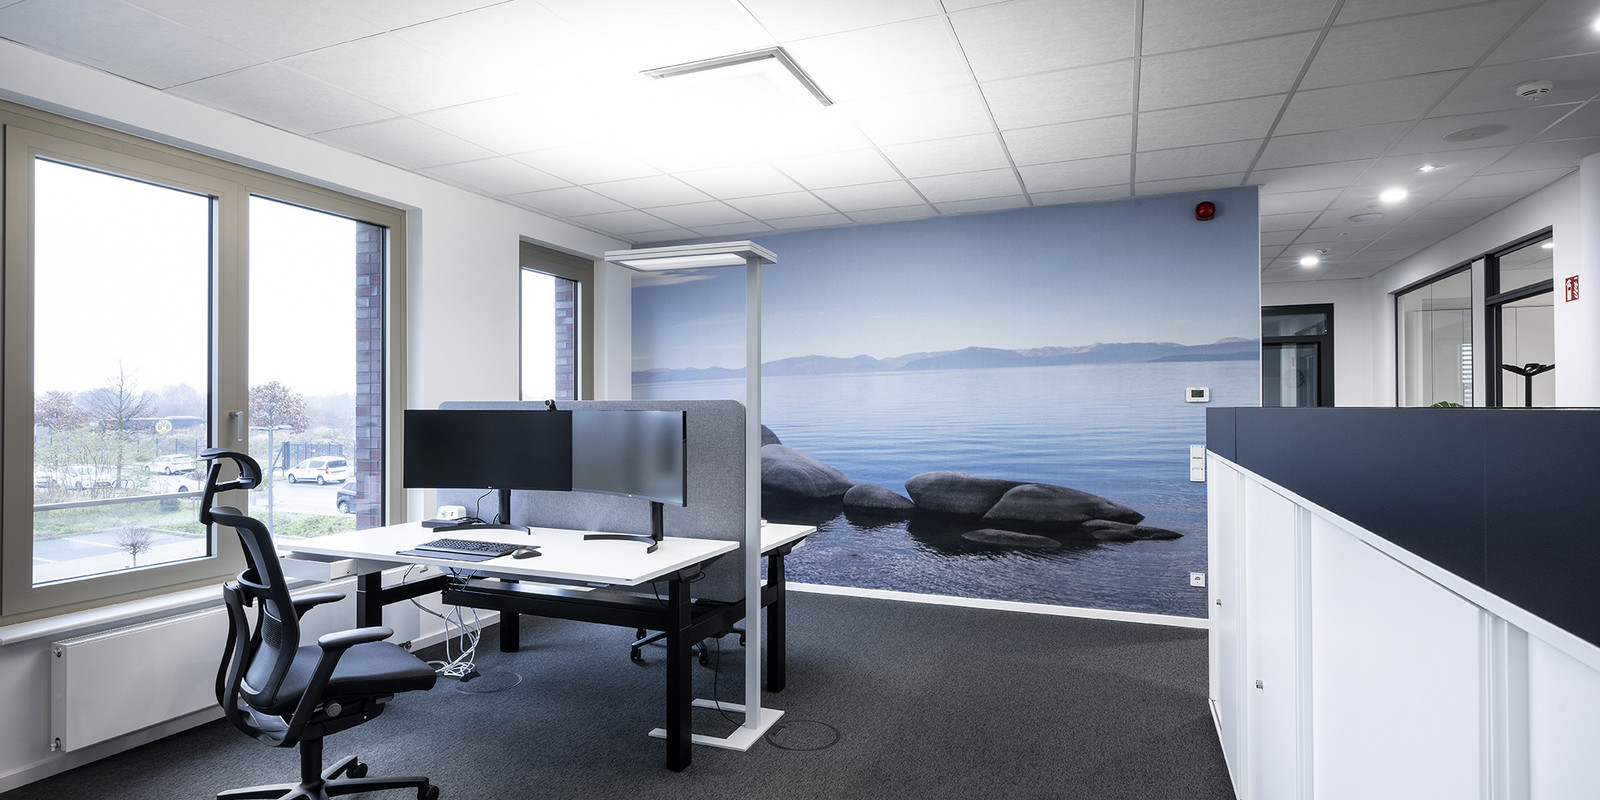 Innovative Umgestaltung: SVH Handels-GmbH gestaltet Arbeitsumgebung mit pro office Mönchengladbach neu Bild 6